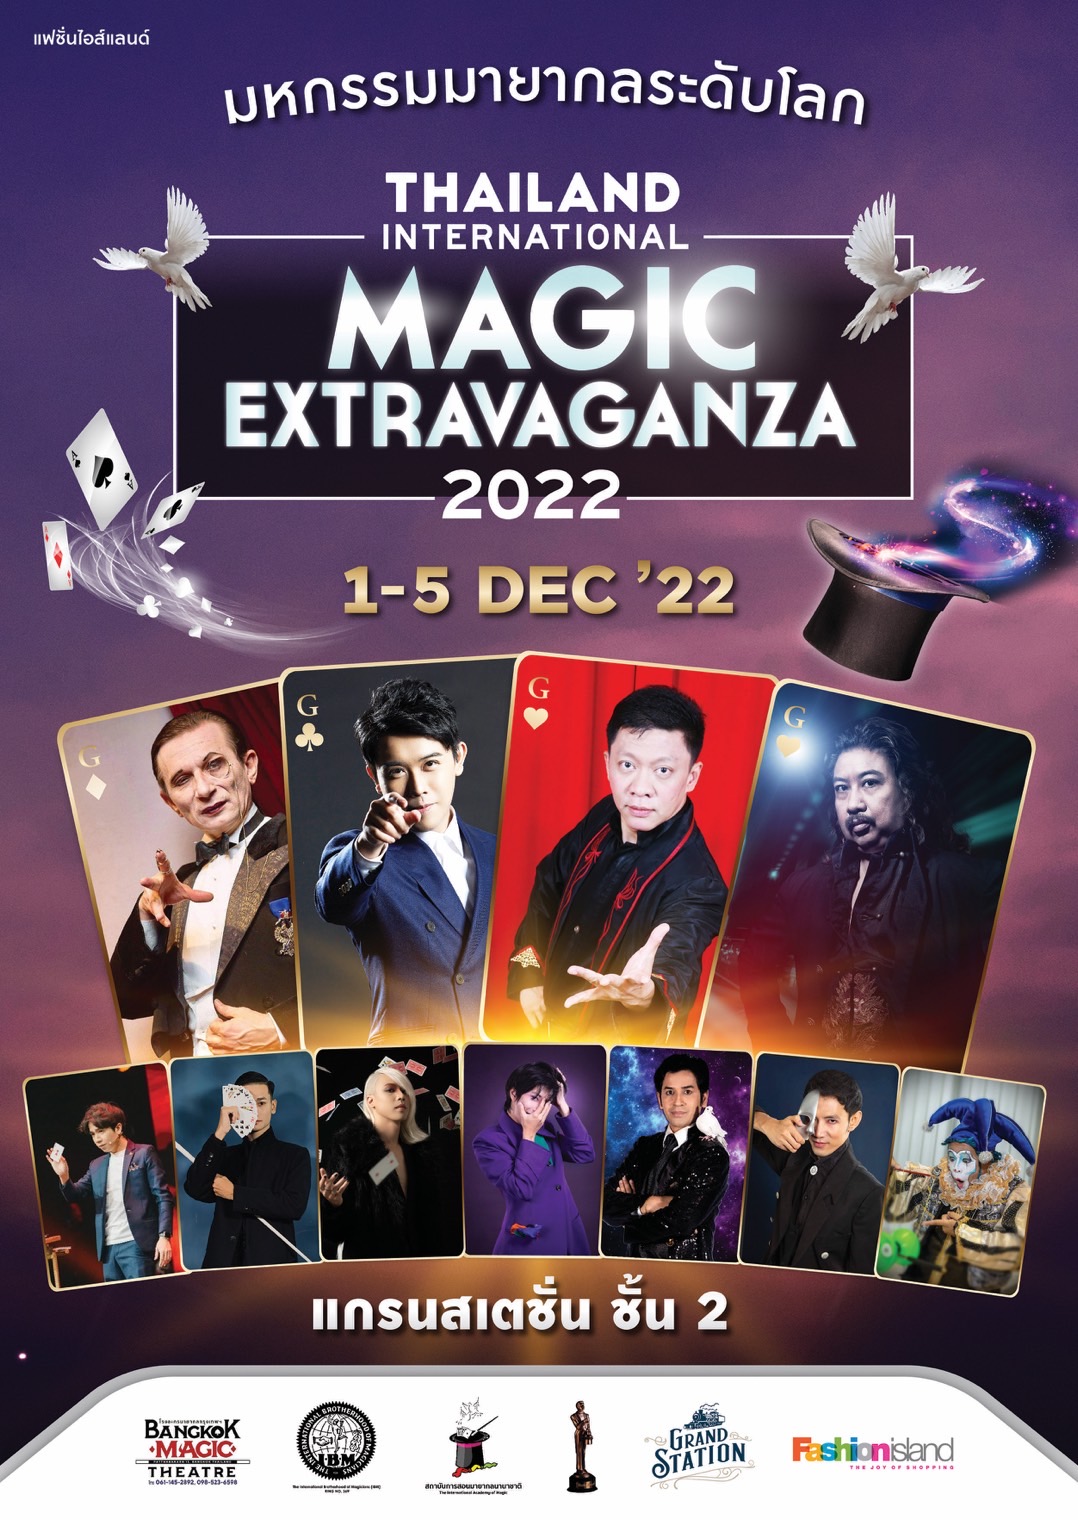 Thailand Magic Extravaganza มหกรรมมายากล เทศกาลมายากล ระดับโลก VK.Vich Vichayut Kanungchoti วิชยุตม์ คนึงโชติ มายากล รับแสดงมายากล Magic Class รับสอนมายากล มายากลเวที การแสดง Stage Magic แสดงวันเด็ก วันปีใหม่ Voronin Magic Bond Lee Mamada สถาบันการสอนมายากลนานาชาติ Albert Tam Cassidy Lee